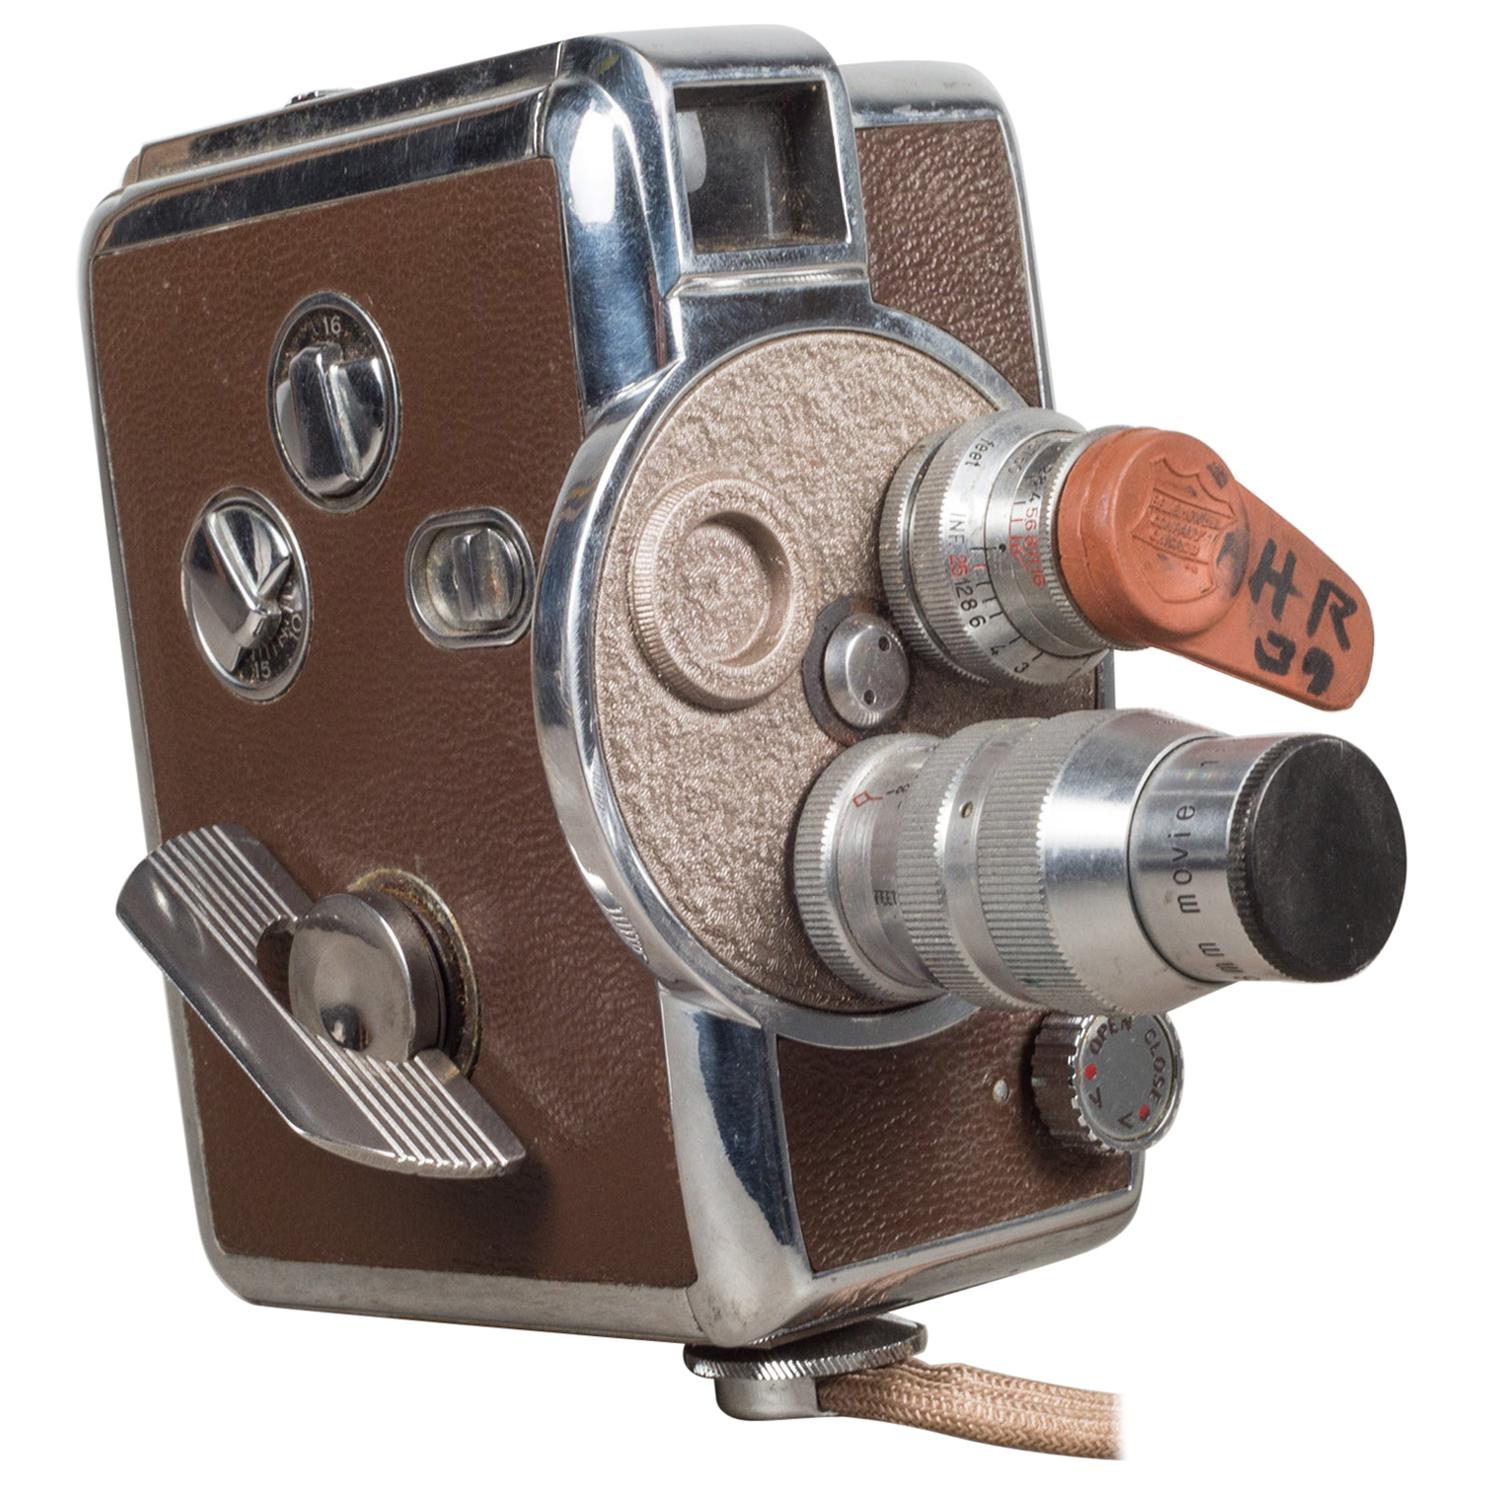 Revere 8mm Movie Camera, circa 1950